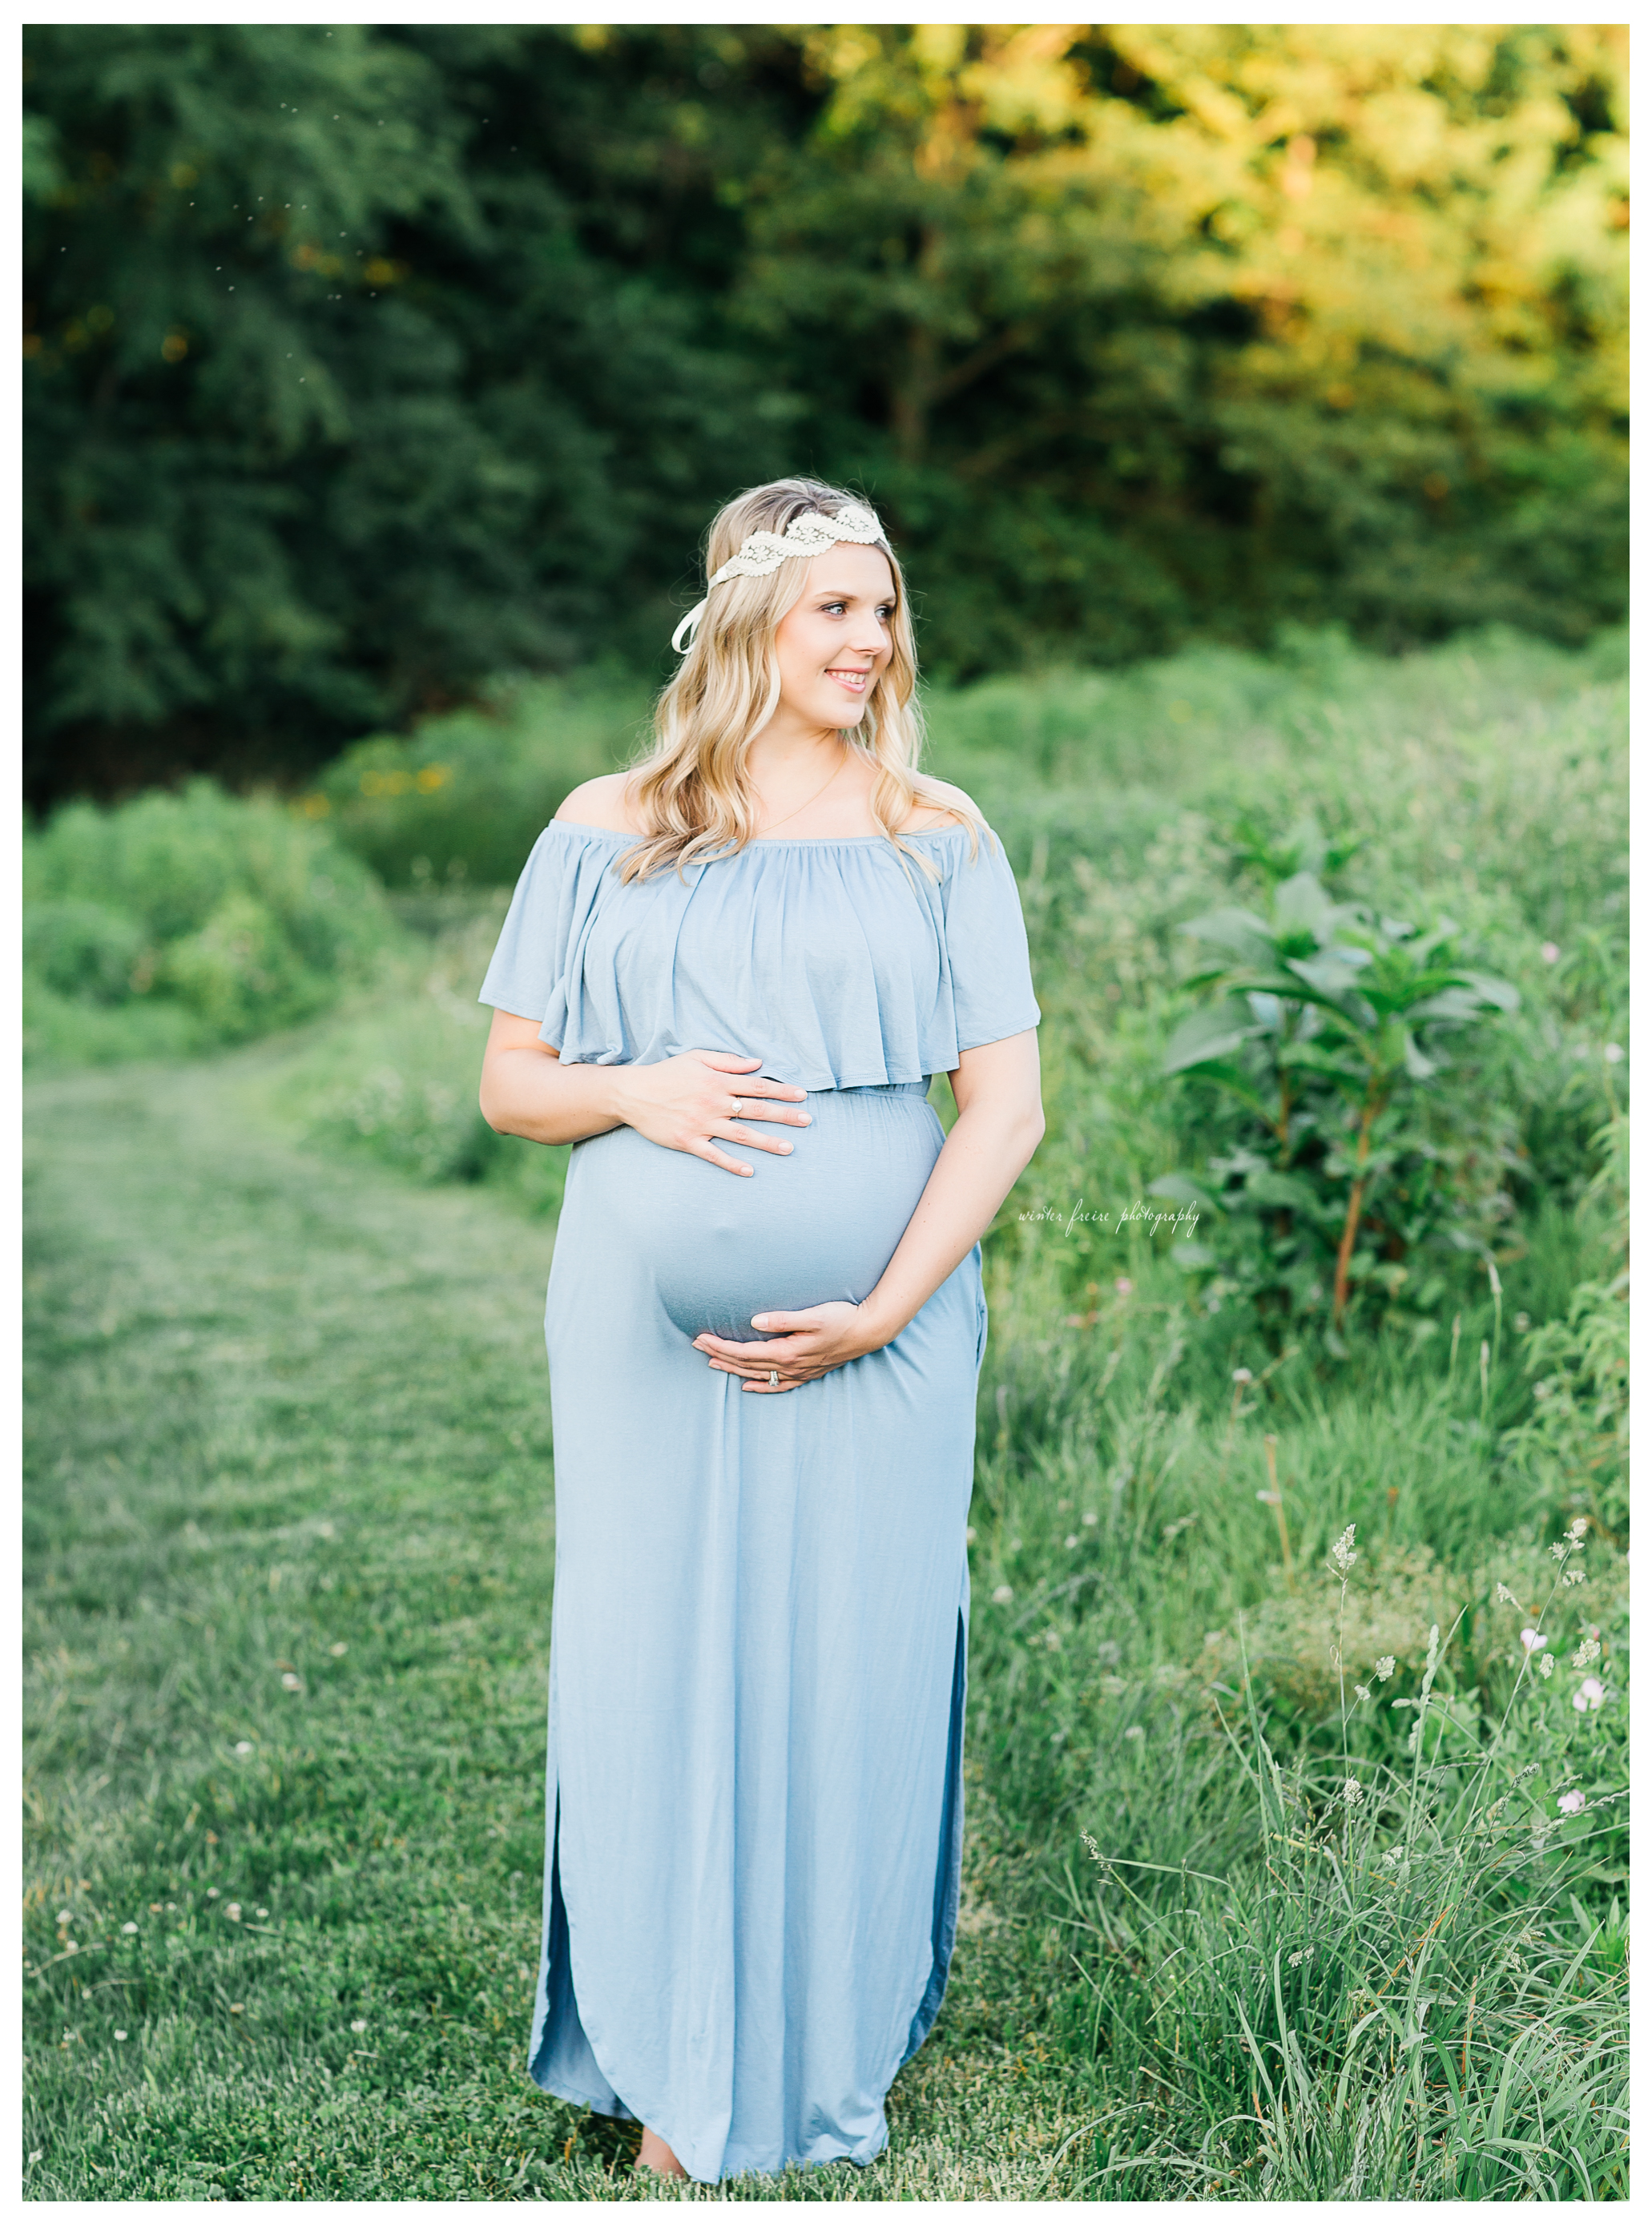 Winter Freire Photography | Maternity Session | Sweet Pure Organic Maternity Portraits | Dayton, Ohio Maternity Photography | Natural Light | Fine Art Maternity Photography | Dayton, Ohio Maternity Photographer | Fine Art Maternity Photographer